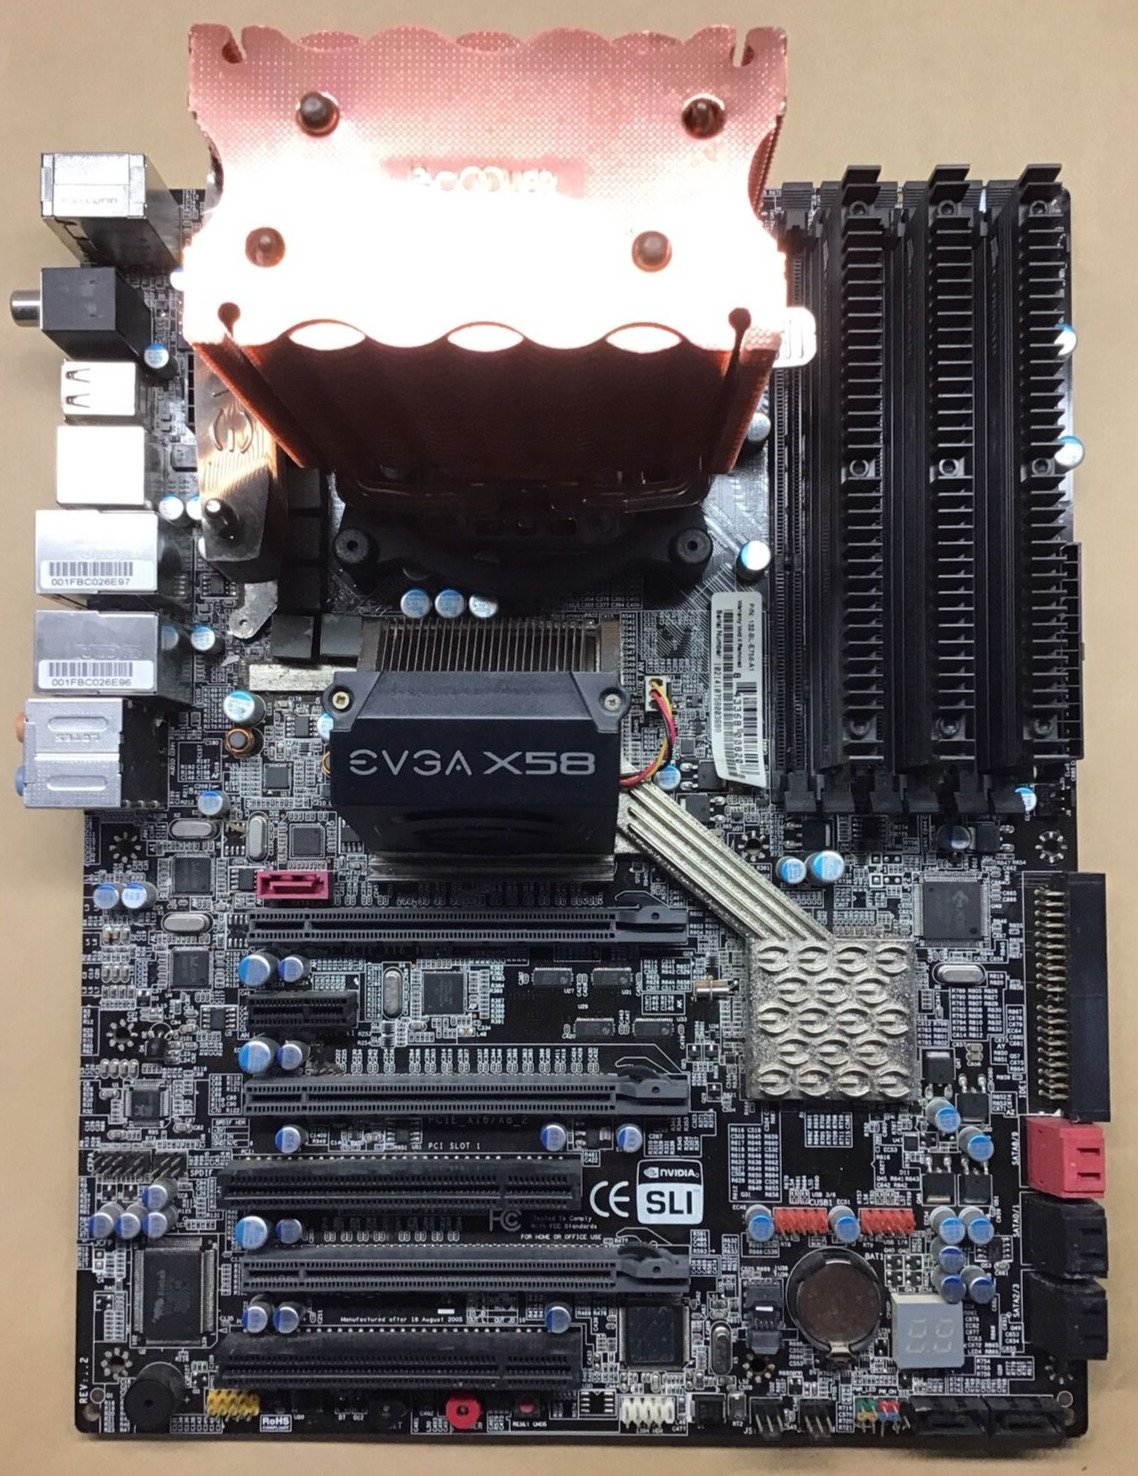 EVGA X58 132-BL-E758-A1 MOTHERBOARD + RAM CORSAIR 6GB DDR3 + CPU + COOLER.